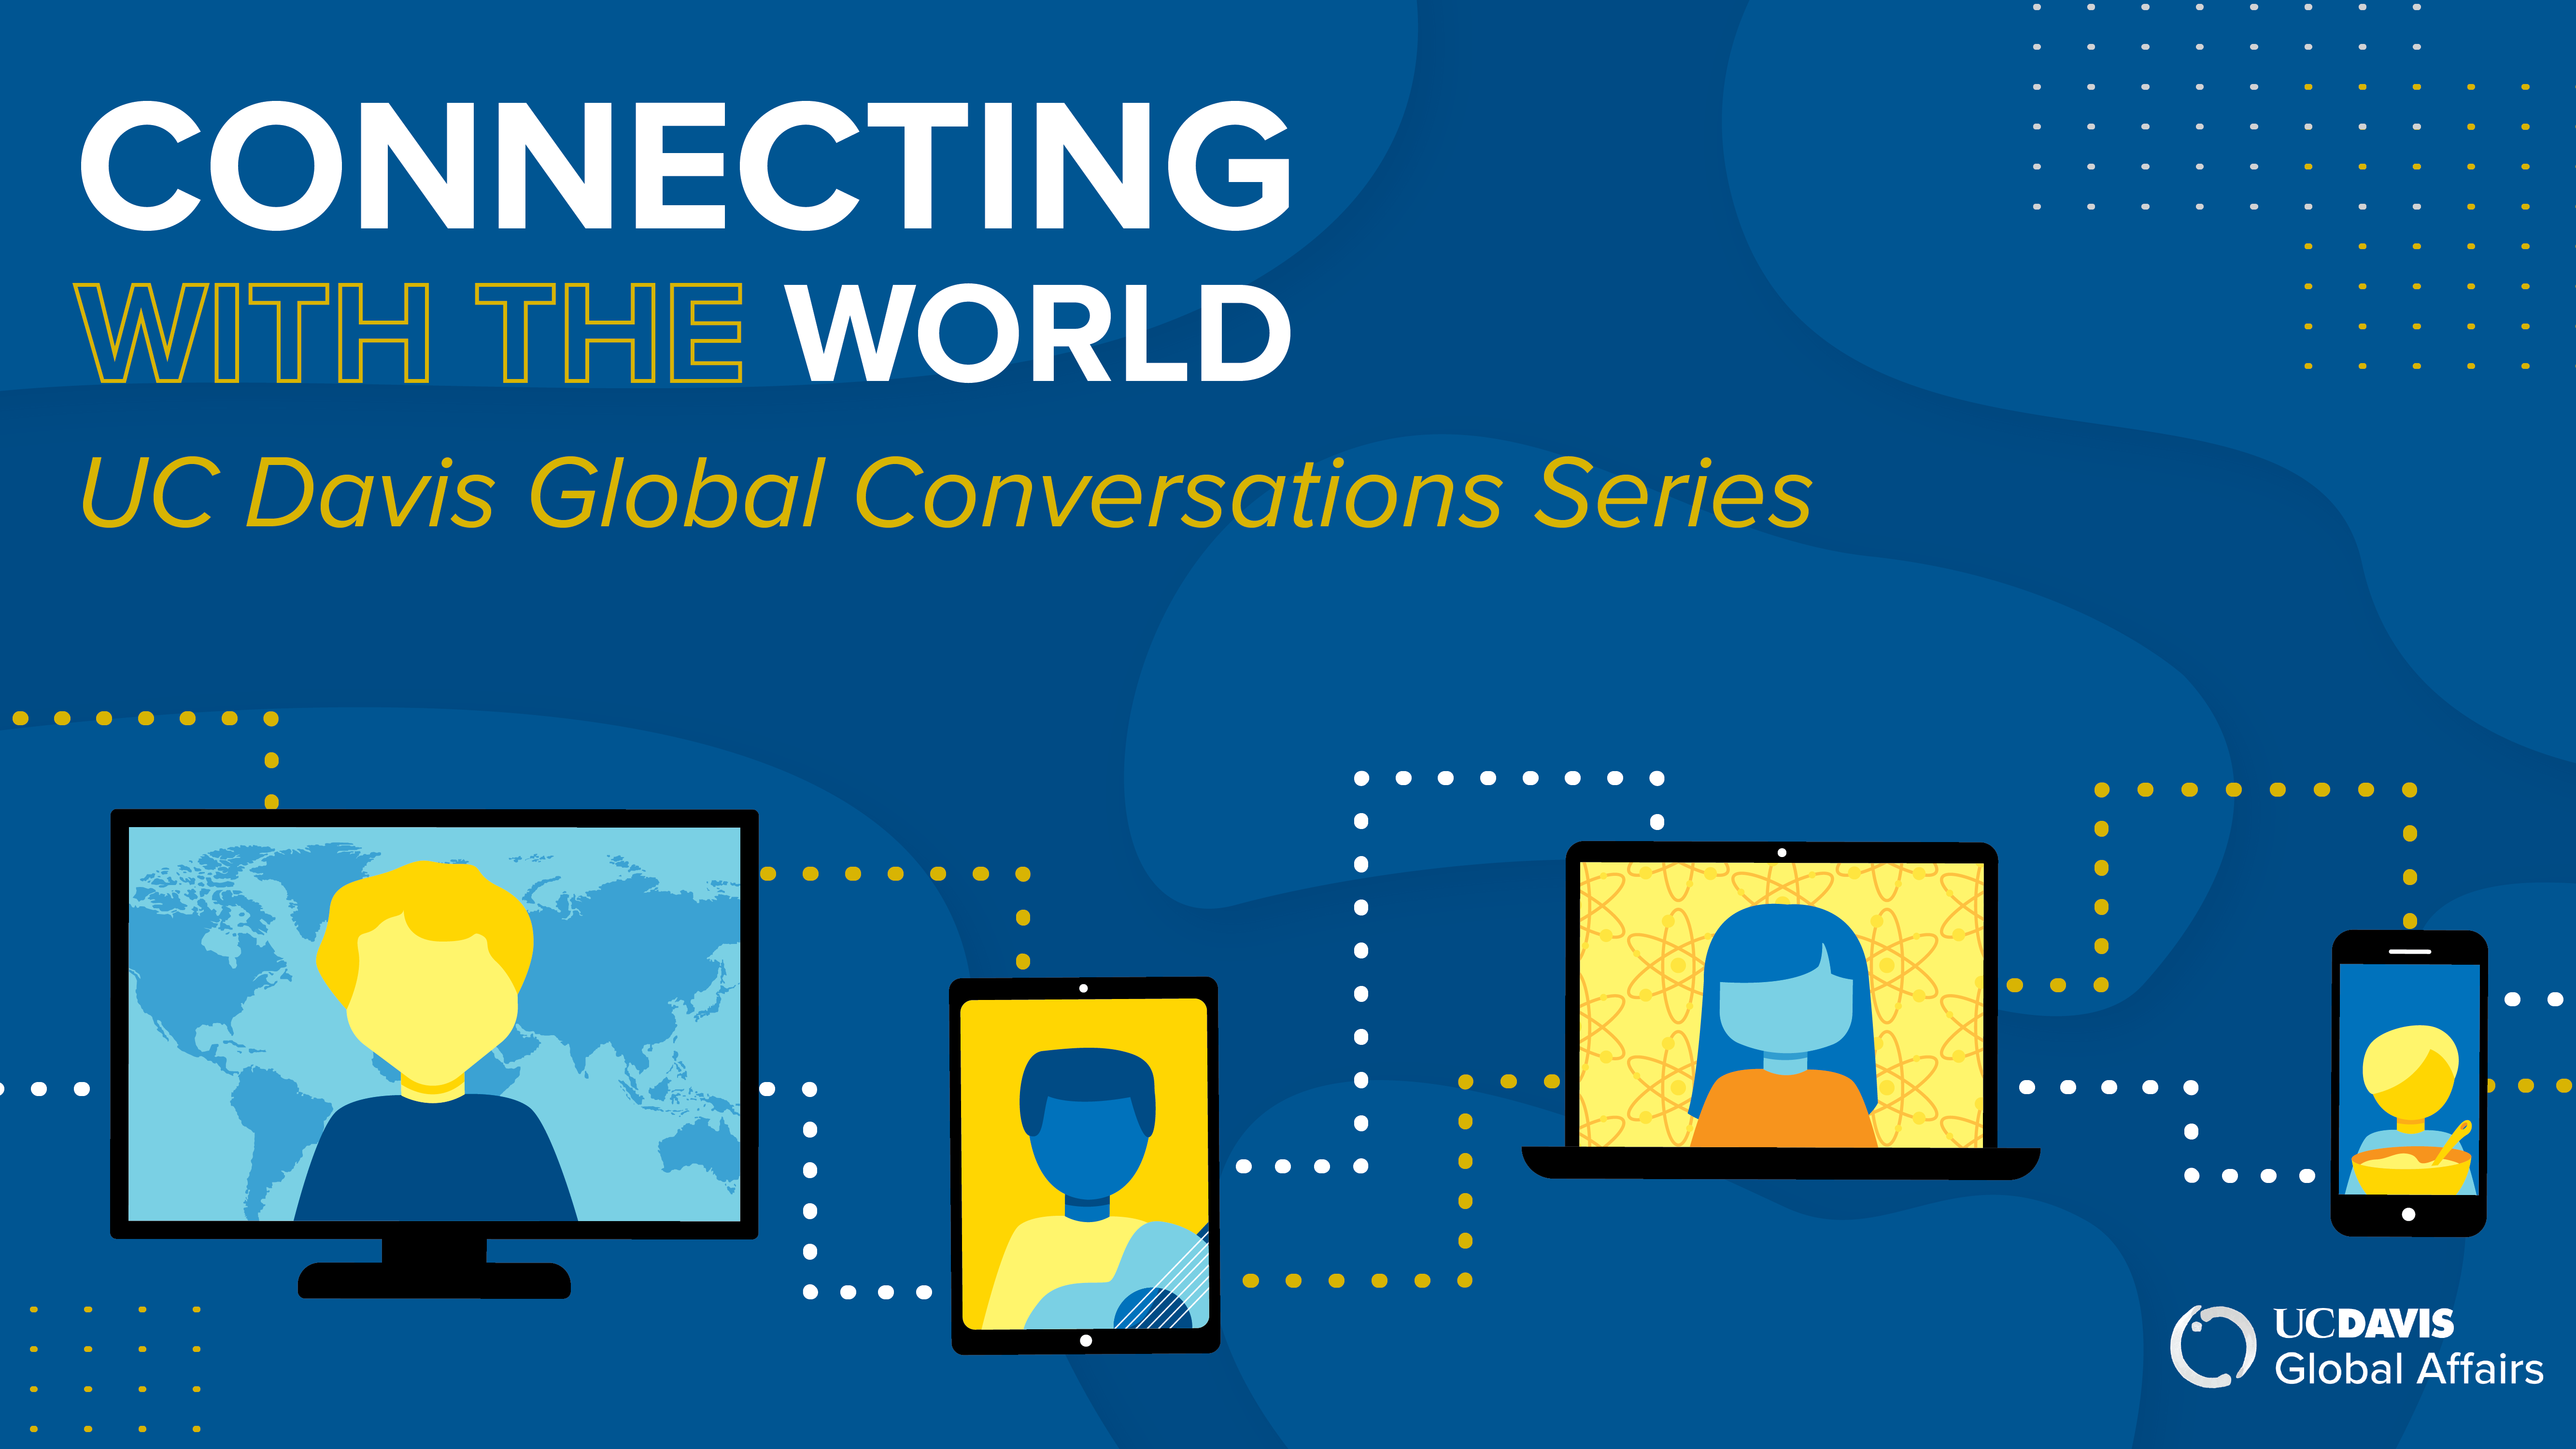 UC Davis Global Conversations Series